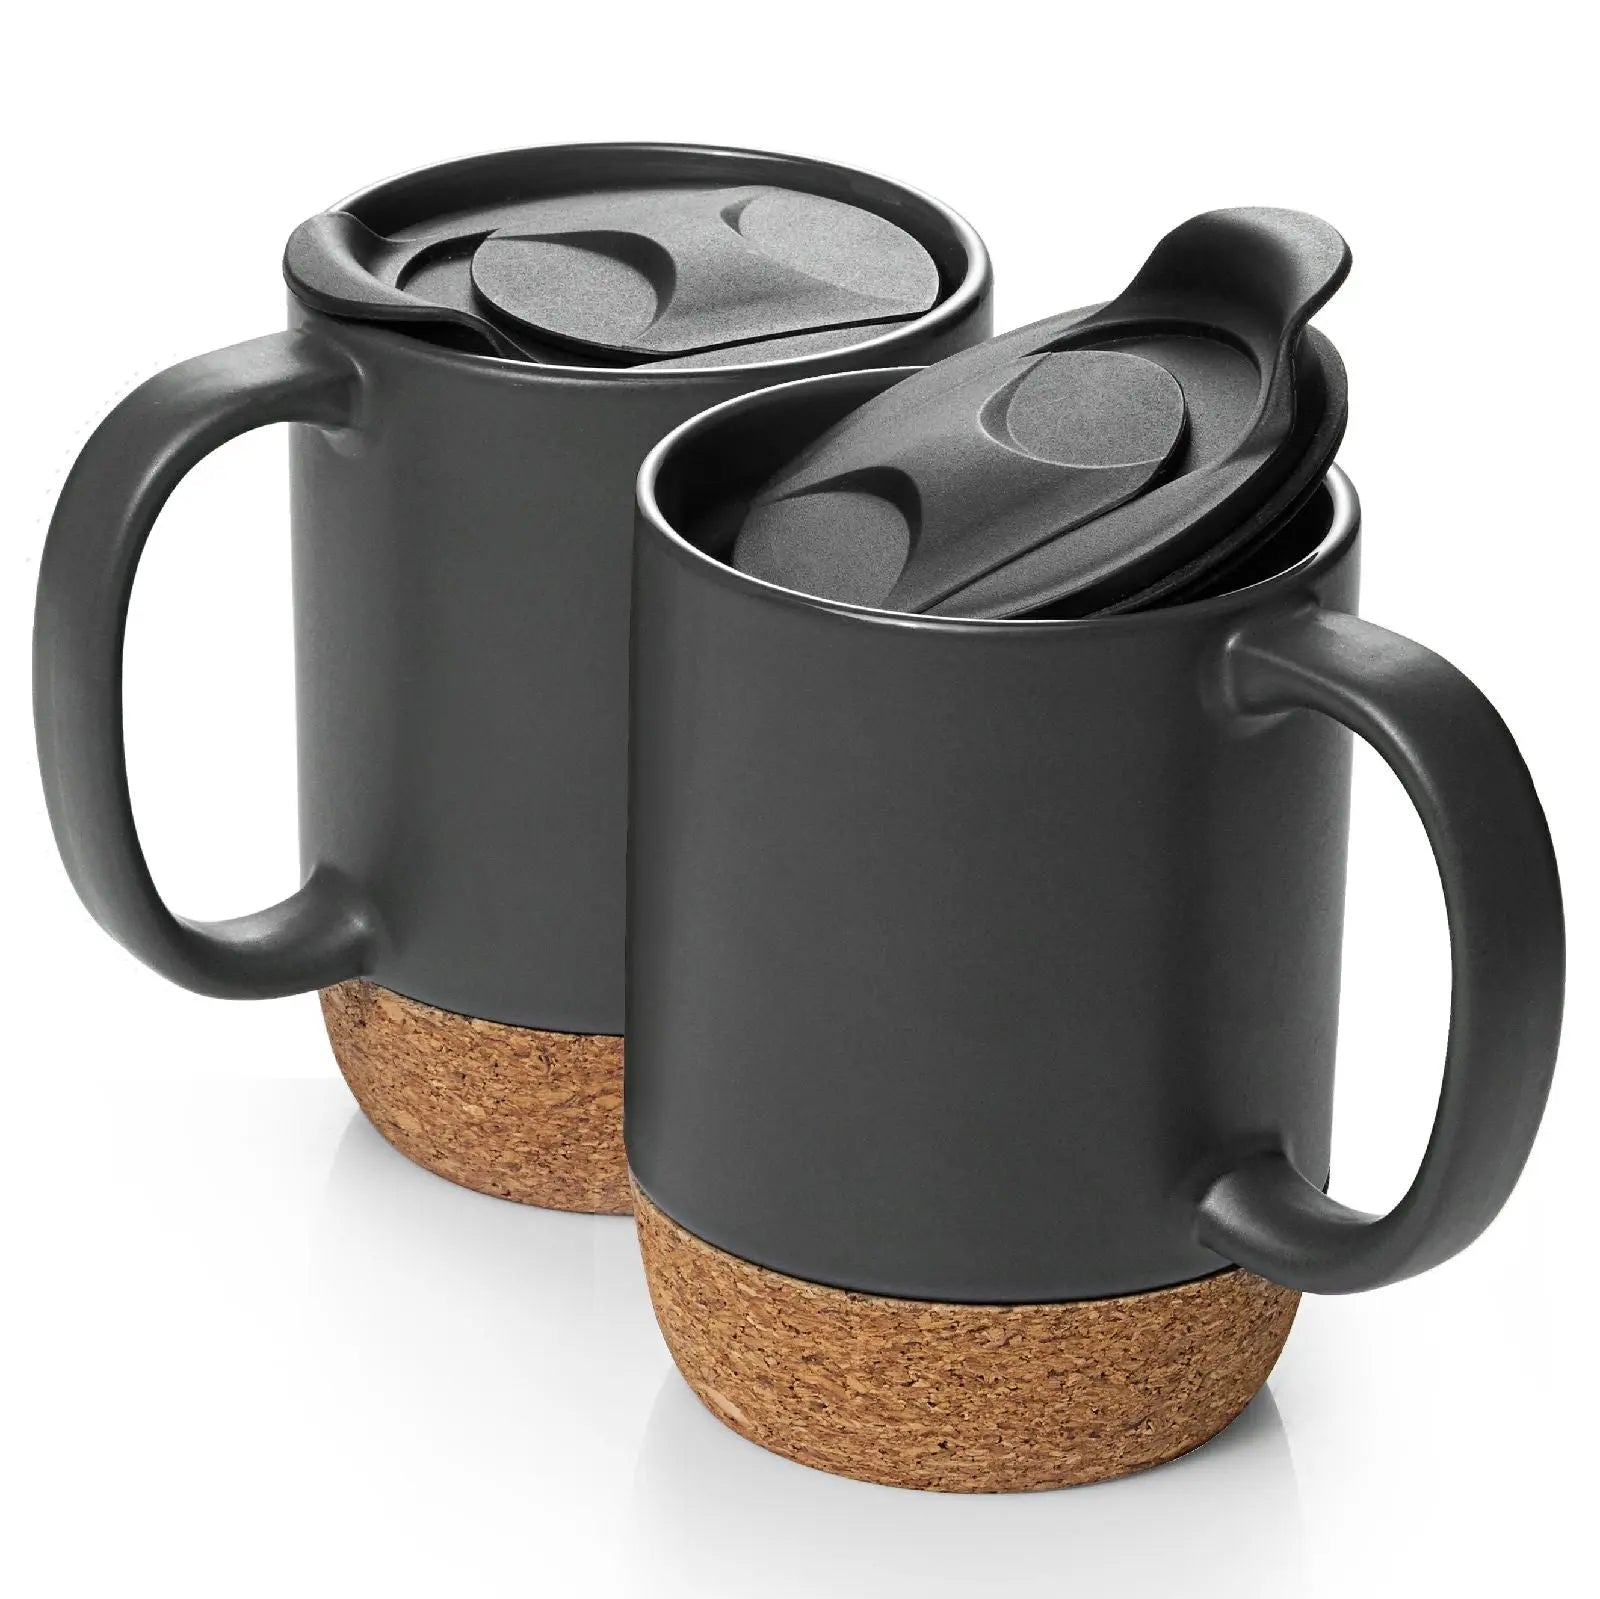 DOWAN Porcelain Coffee Mugs Set, 16 Oz Coffee Mug Set of 6 with Handle -  Bed Bath & Beyond - 33423475